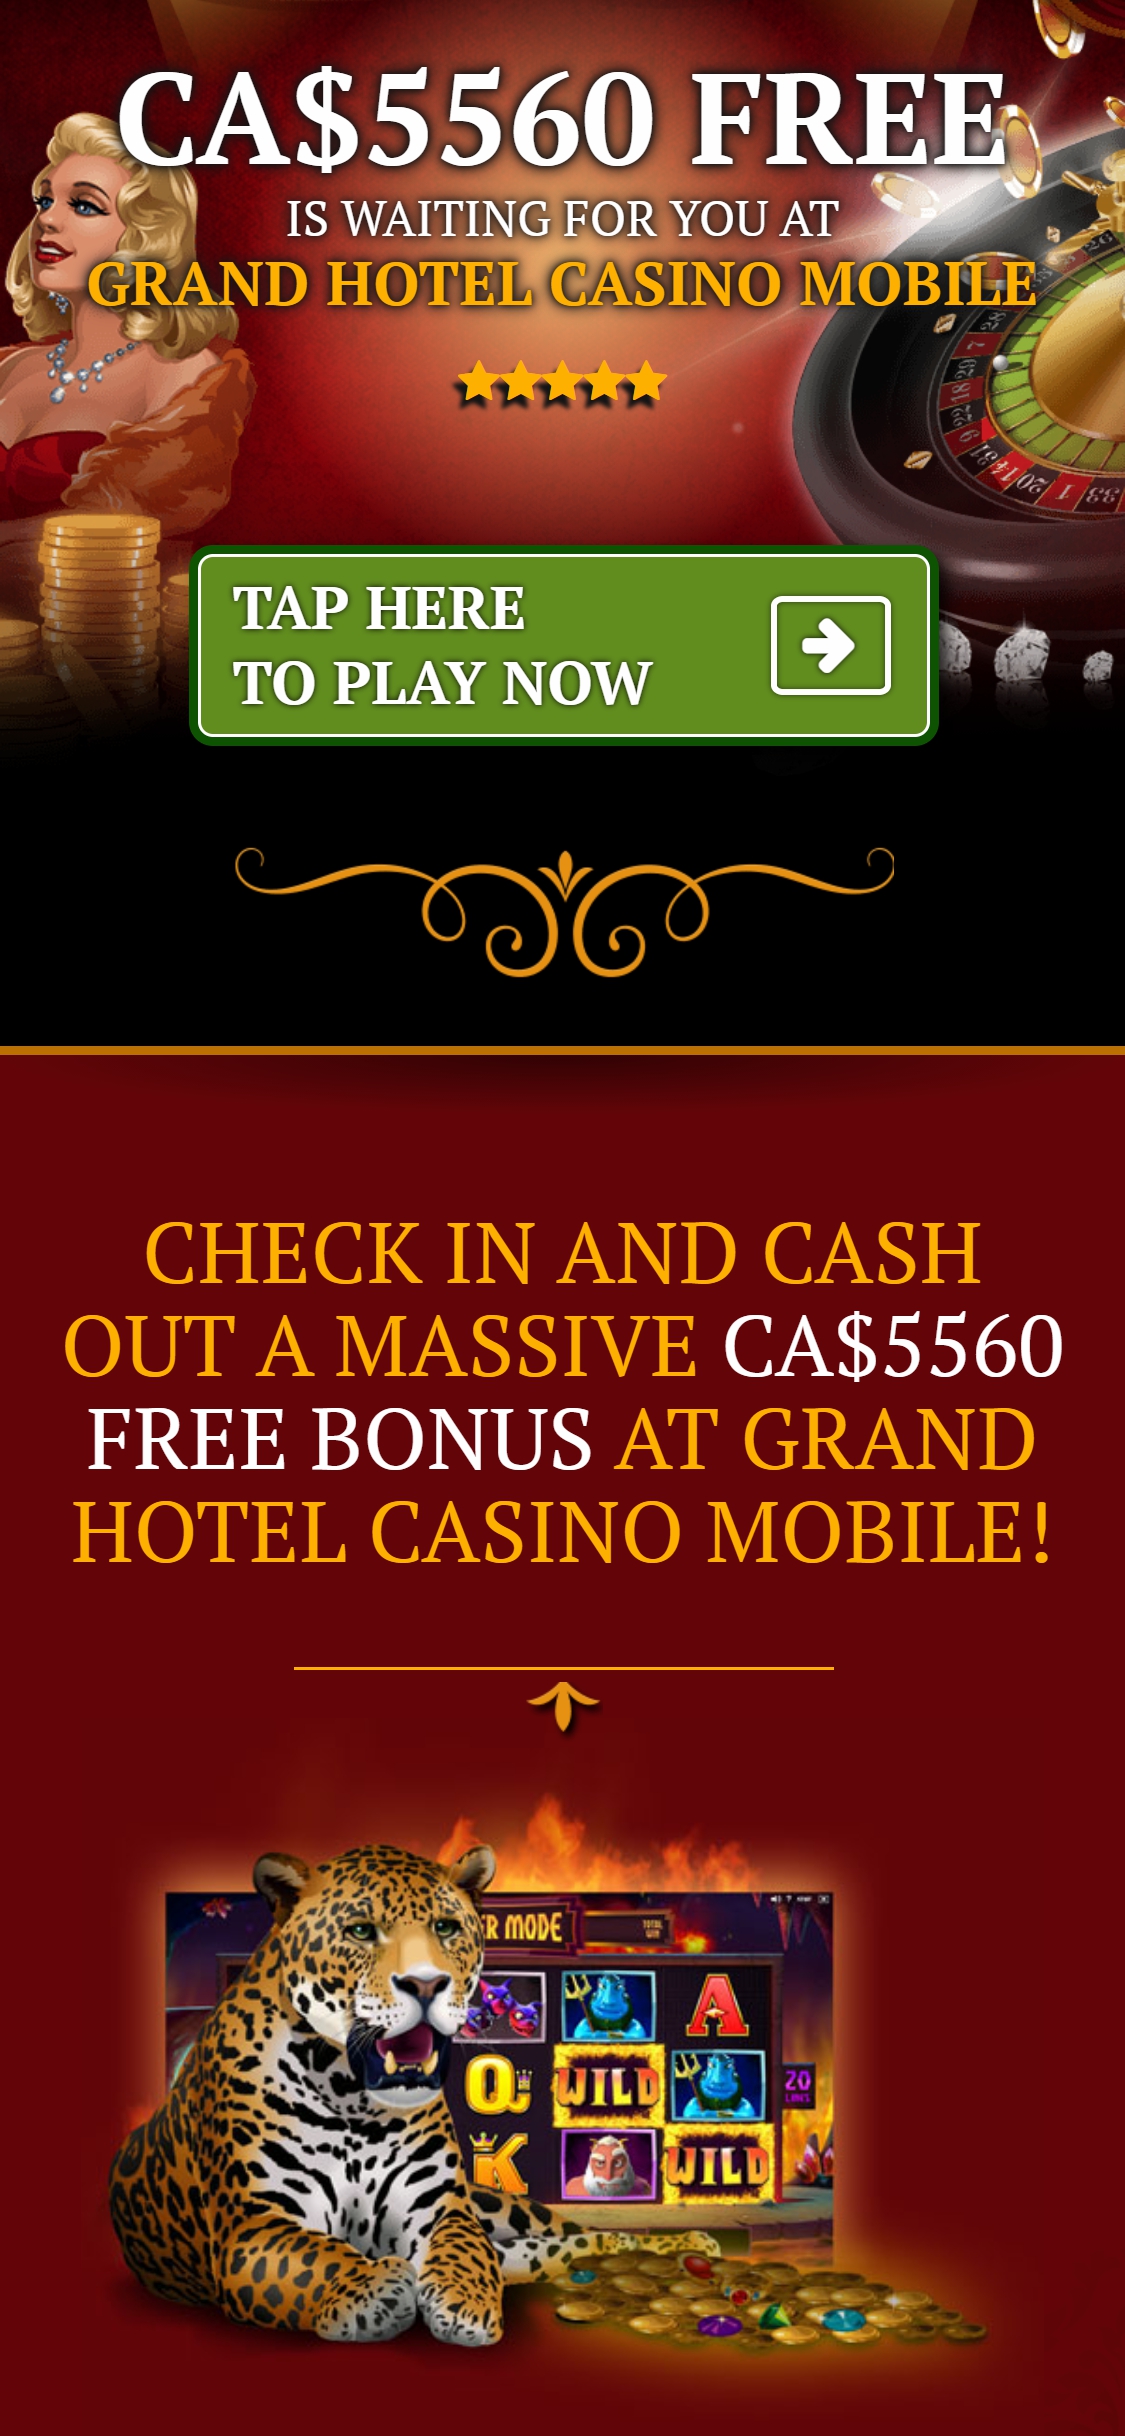 Grand Hotel Casino Mobile No Deposit Bonus Review